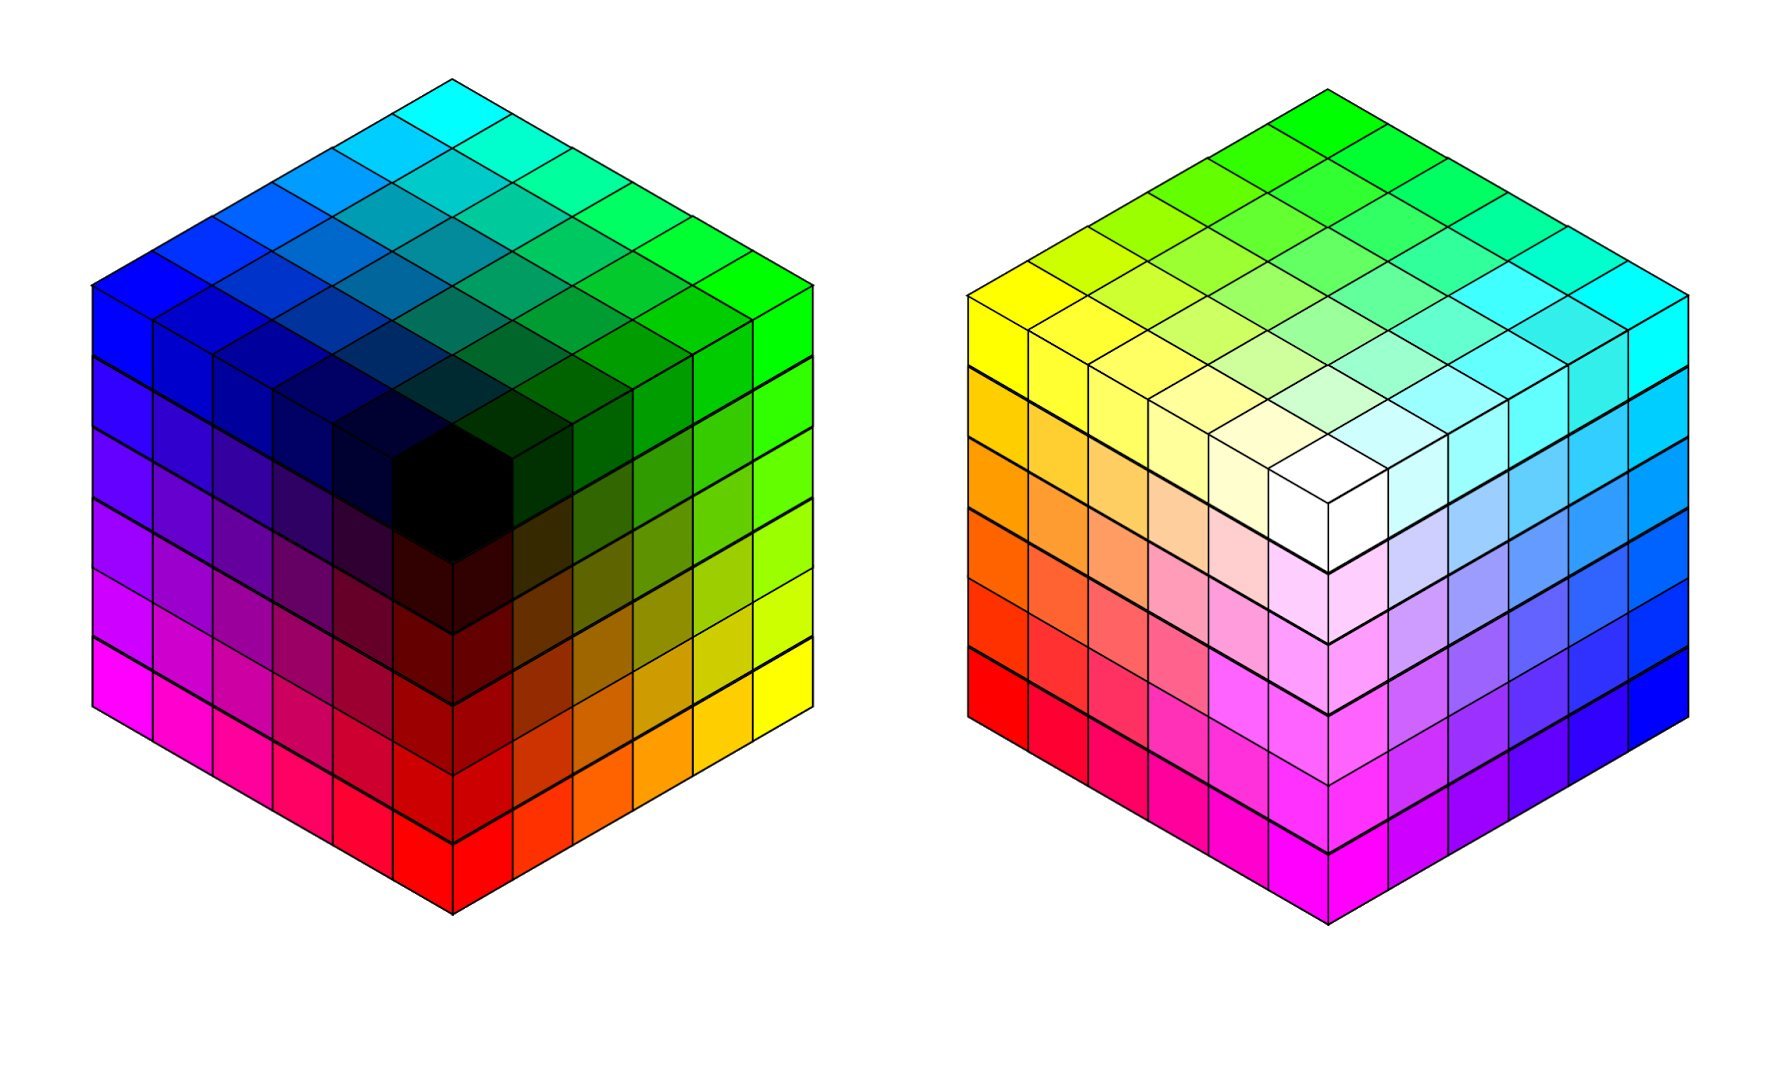 Color cube. Модель РГБ куб. Цветовая модель RGB куб. Цветовой куб РГБ. Цветовая модель Смук куб.